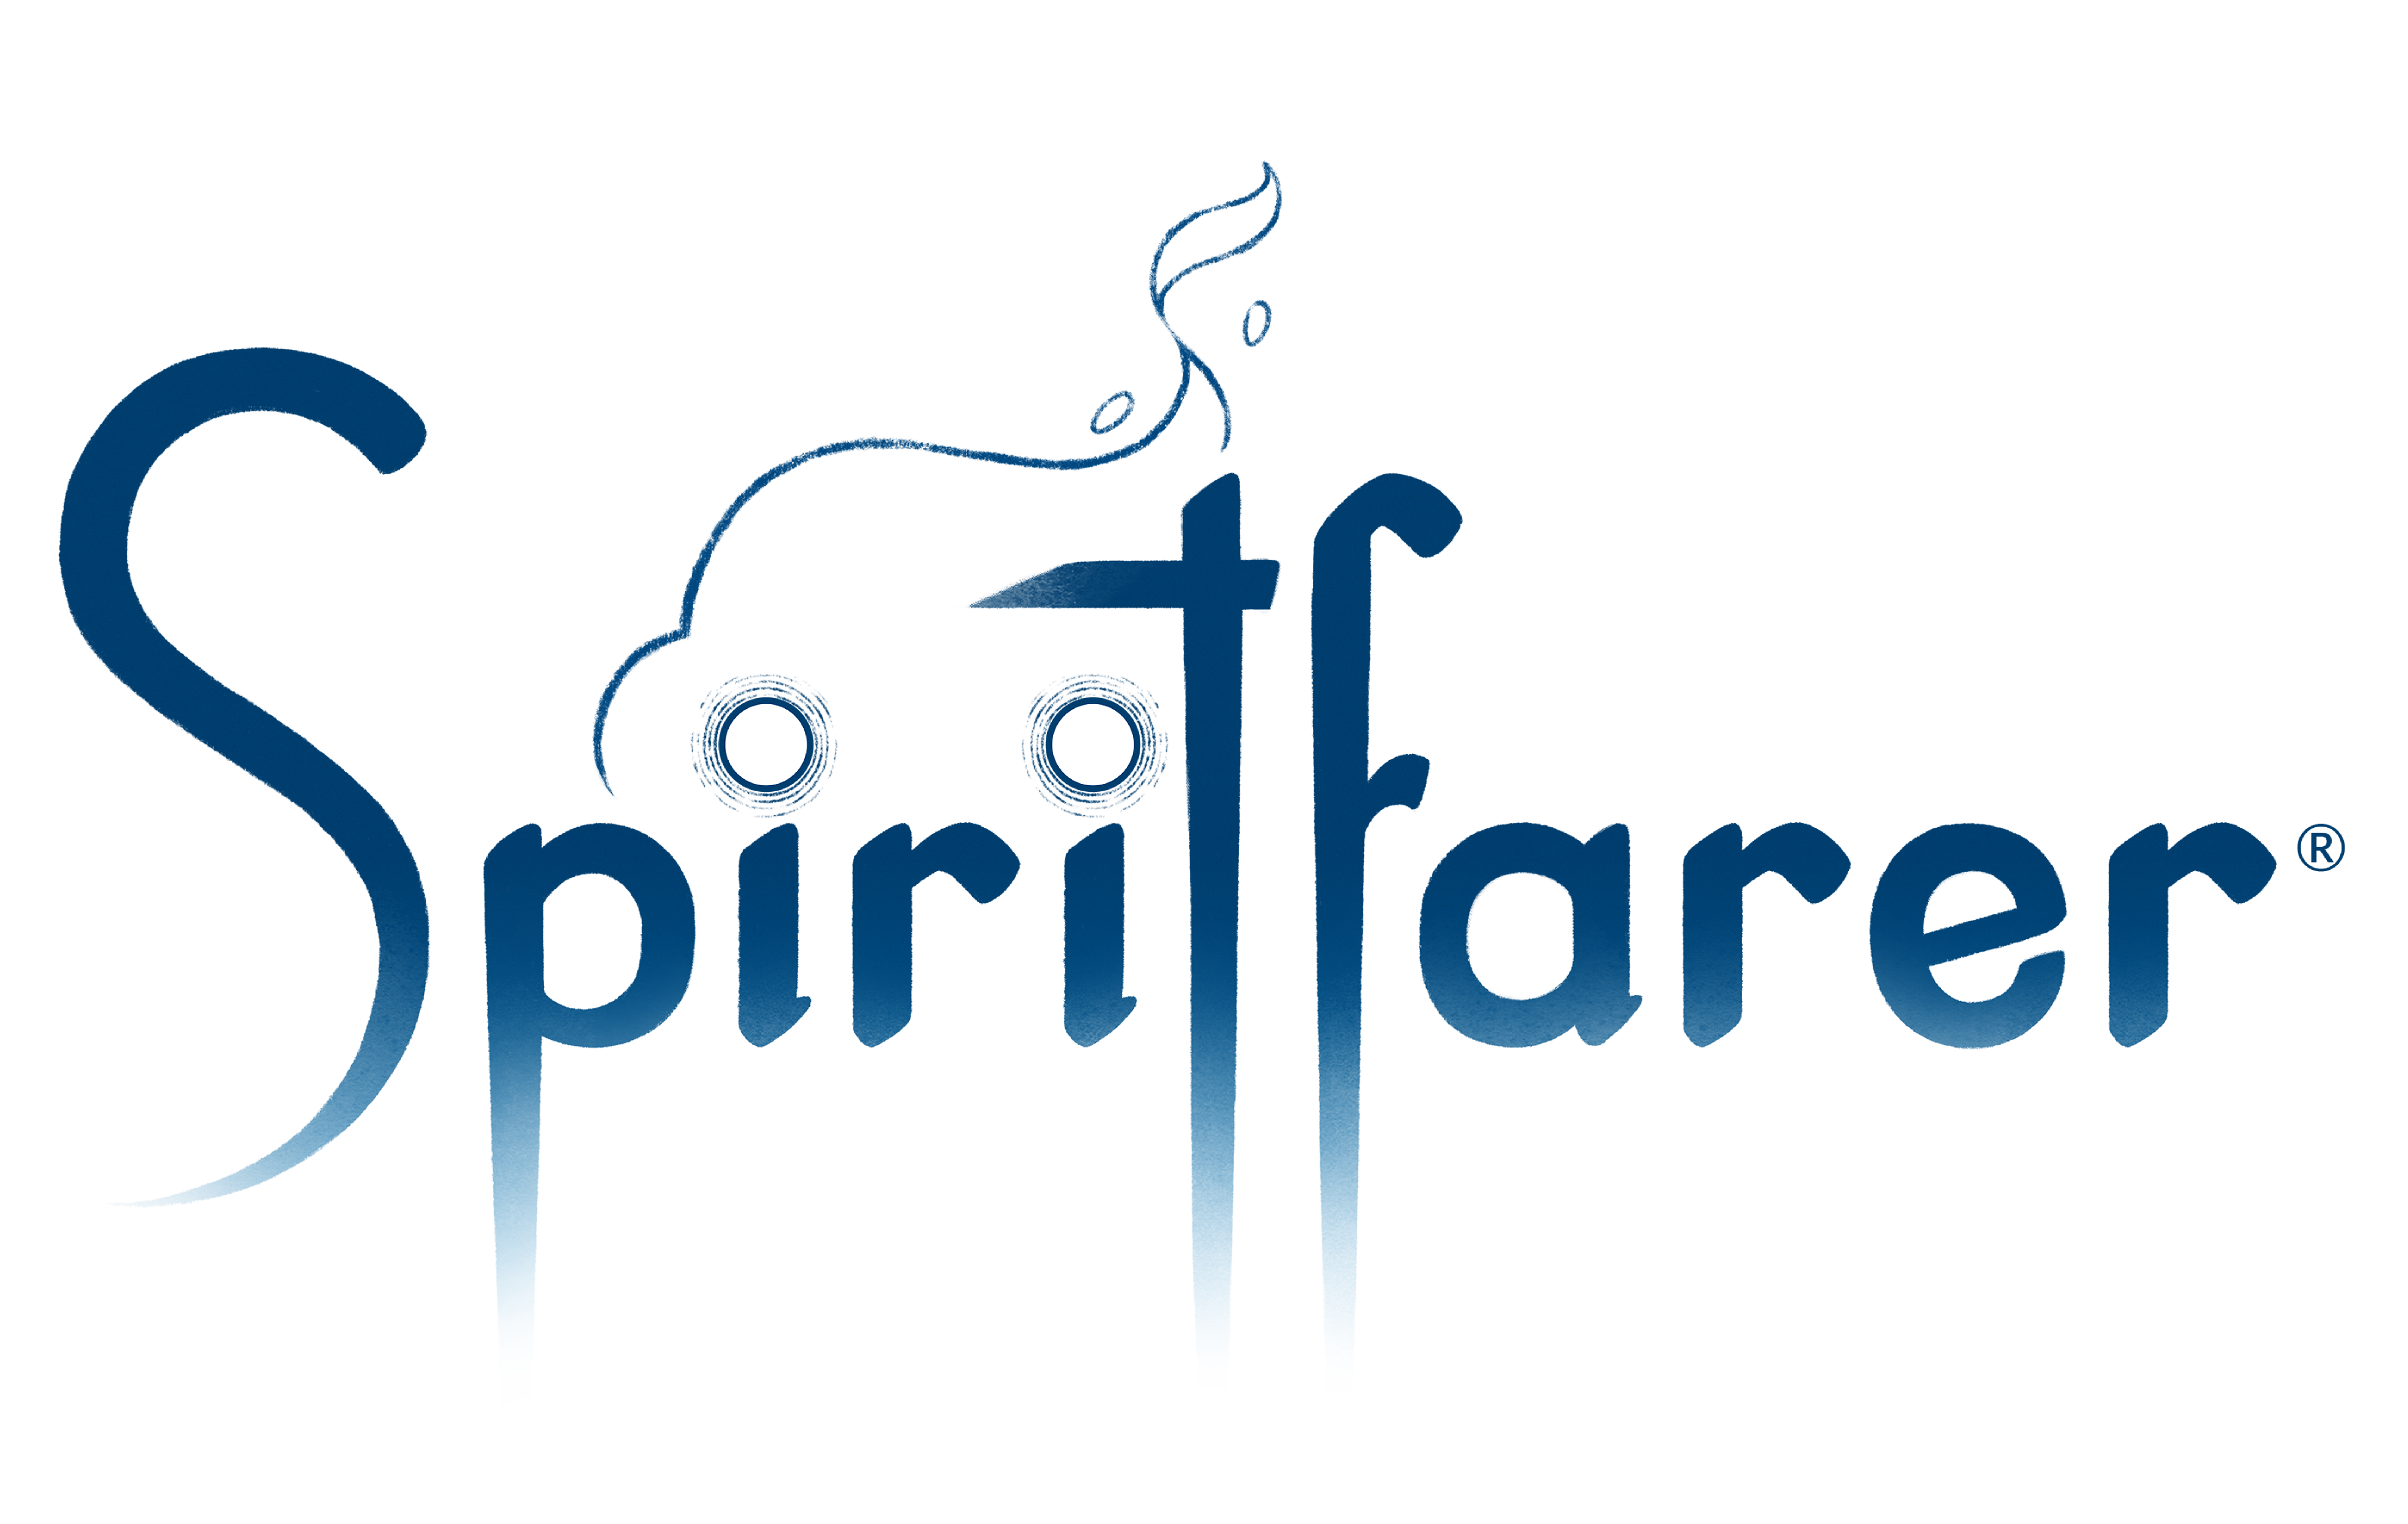 spiritfarer logo